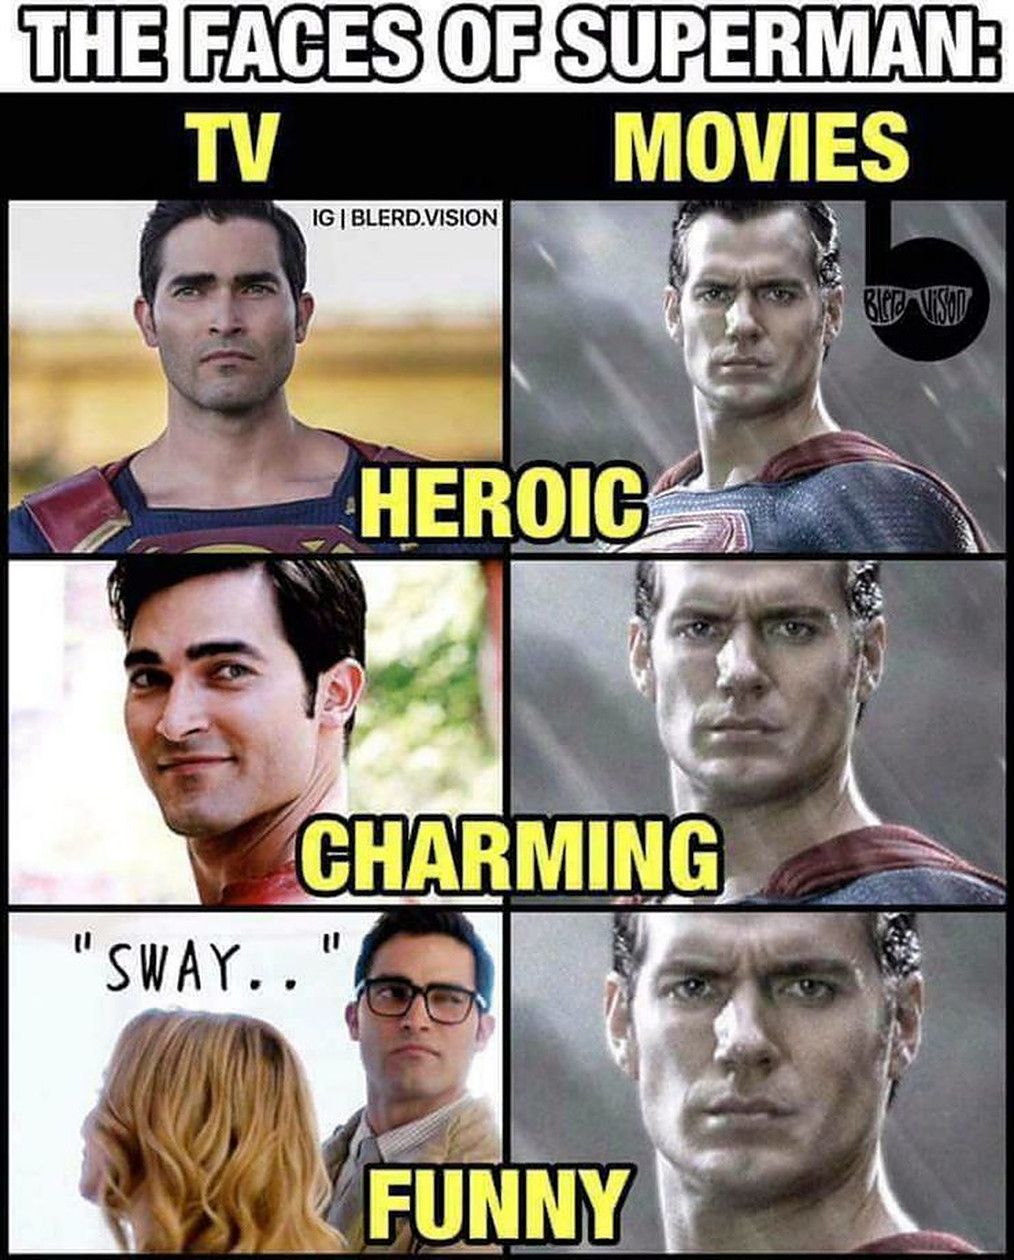 Superman meme